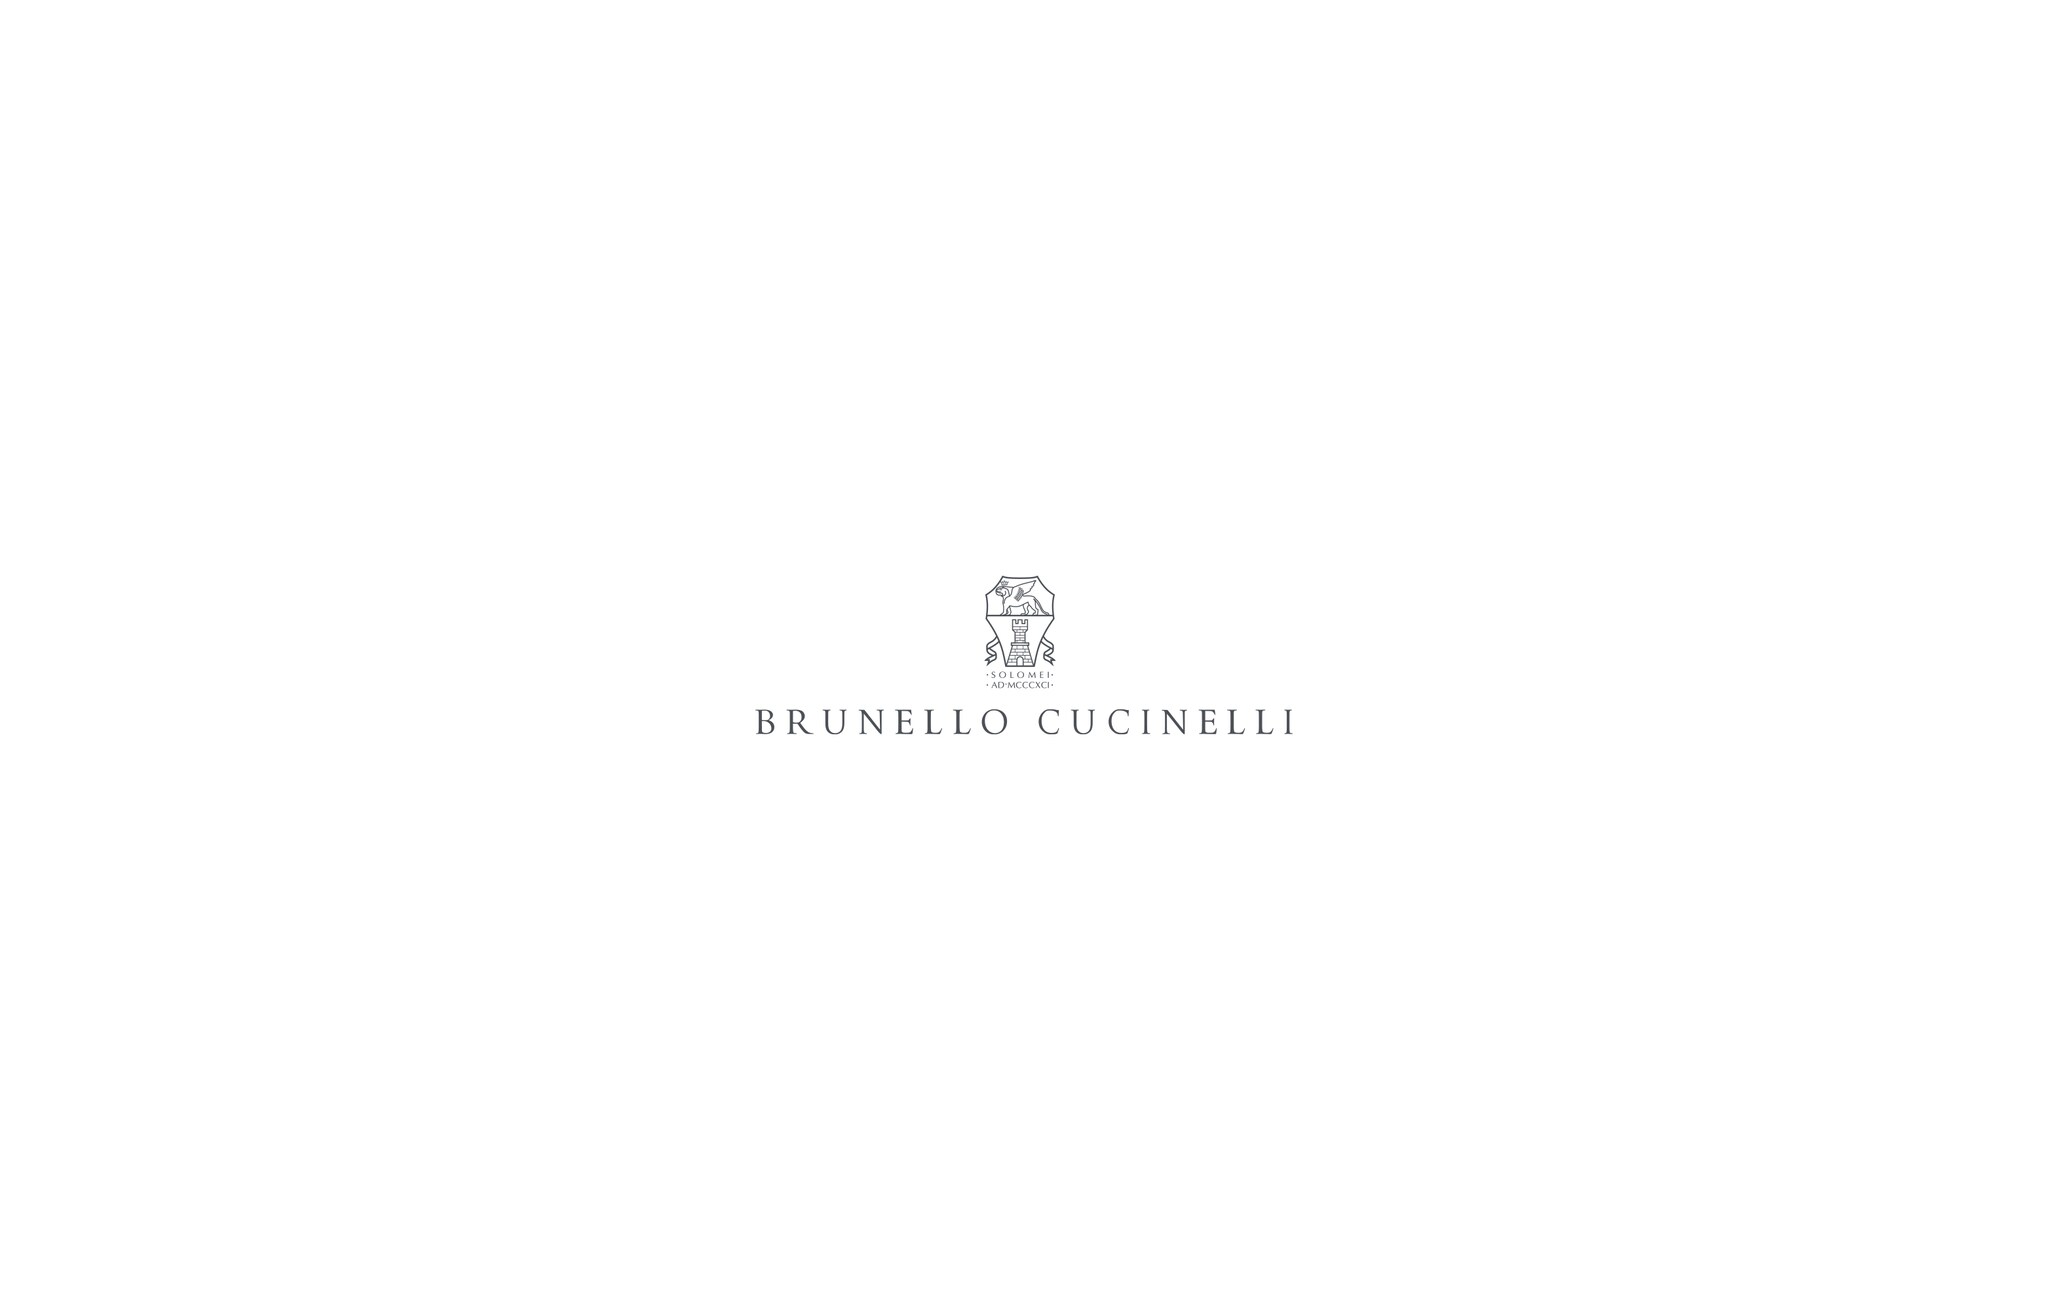  Virgin wool jersey dress Anthracite Woman - Brunello Cucinelli 